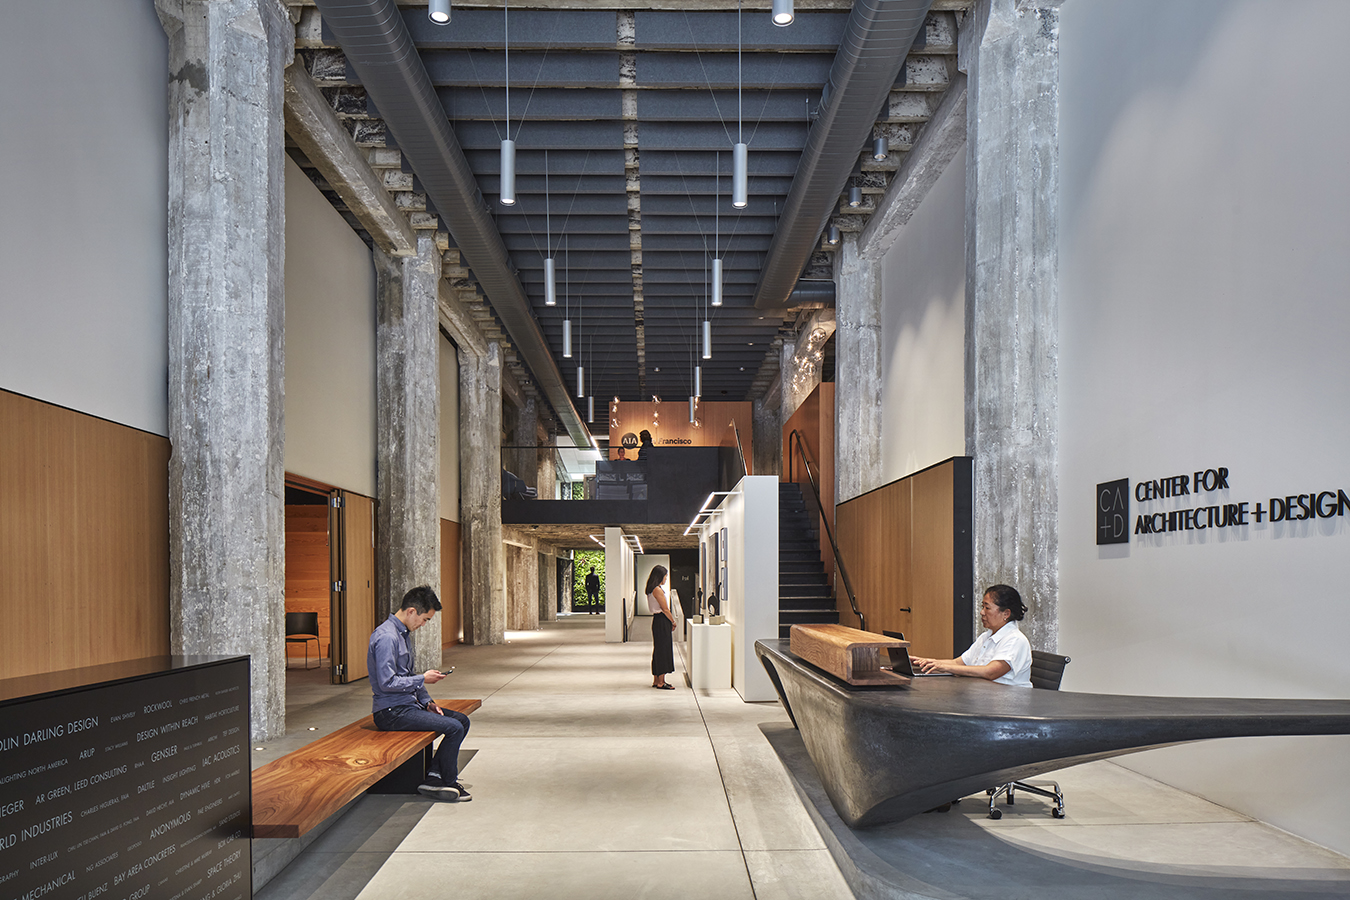 AIA San Francisco Opens the Center for Architecture + Design